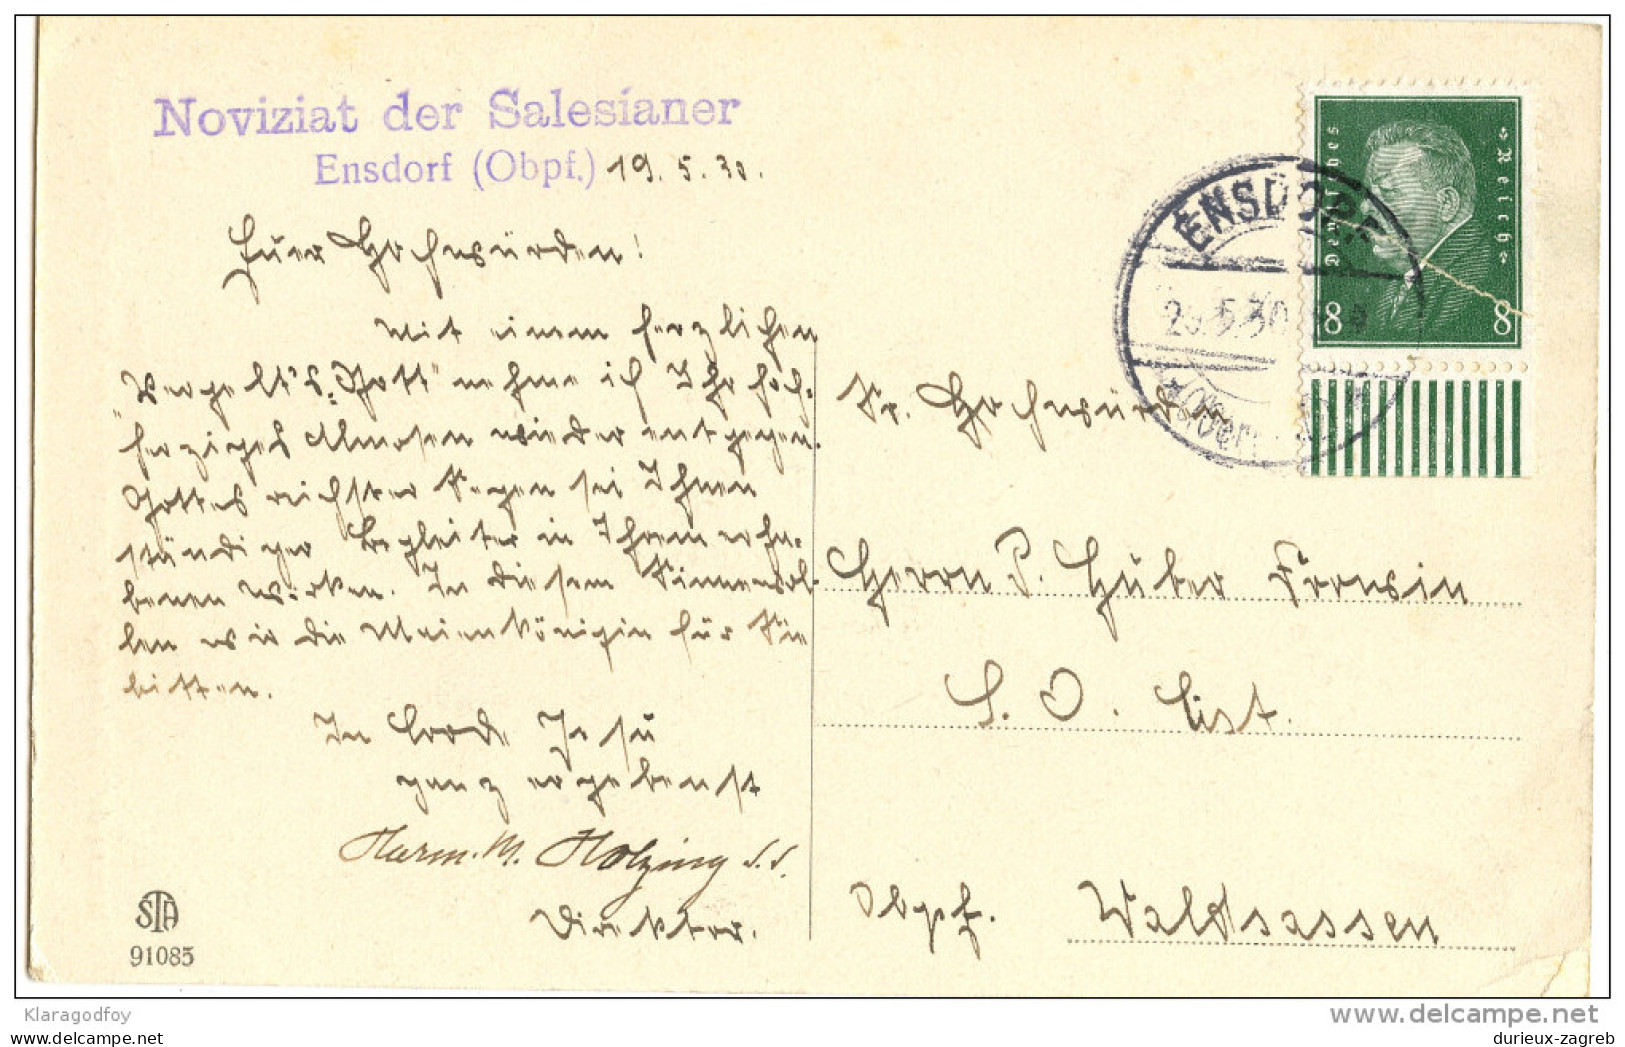 Chiesa Di S.Francesco Di Sales Old Postcard Sent From Germany 1930 Bb151012 - Churches